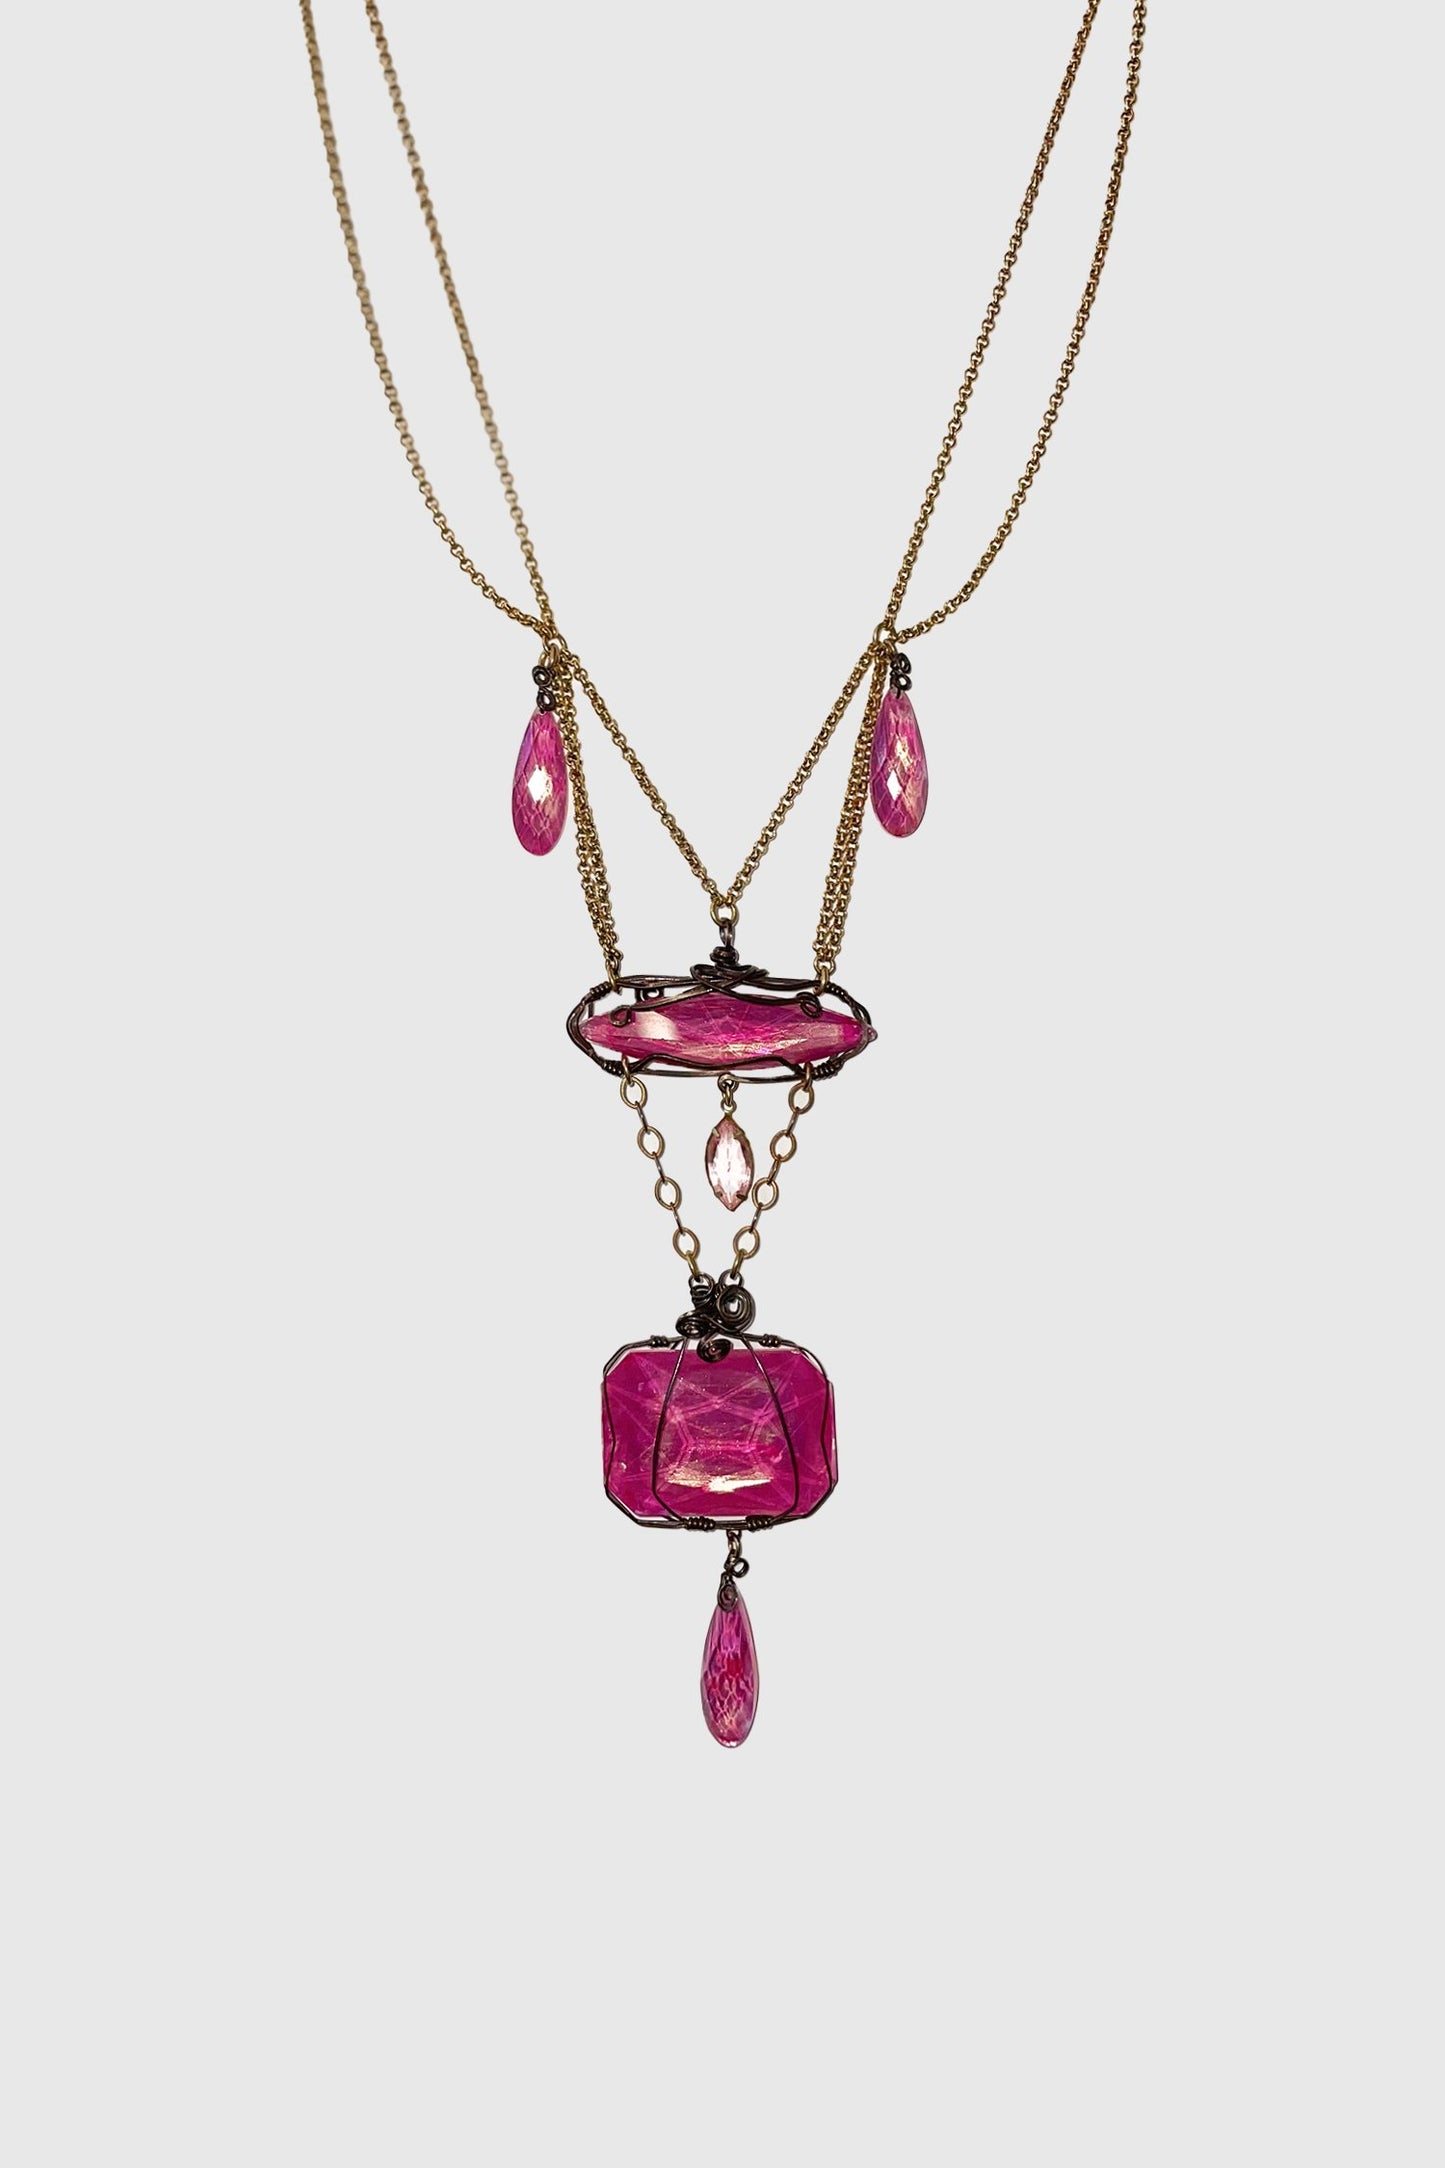 Anna Sui x Erickson Beamon Teardrop Crystal Necklace Ruby, long 19.5-inch, Pendant 5-inch